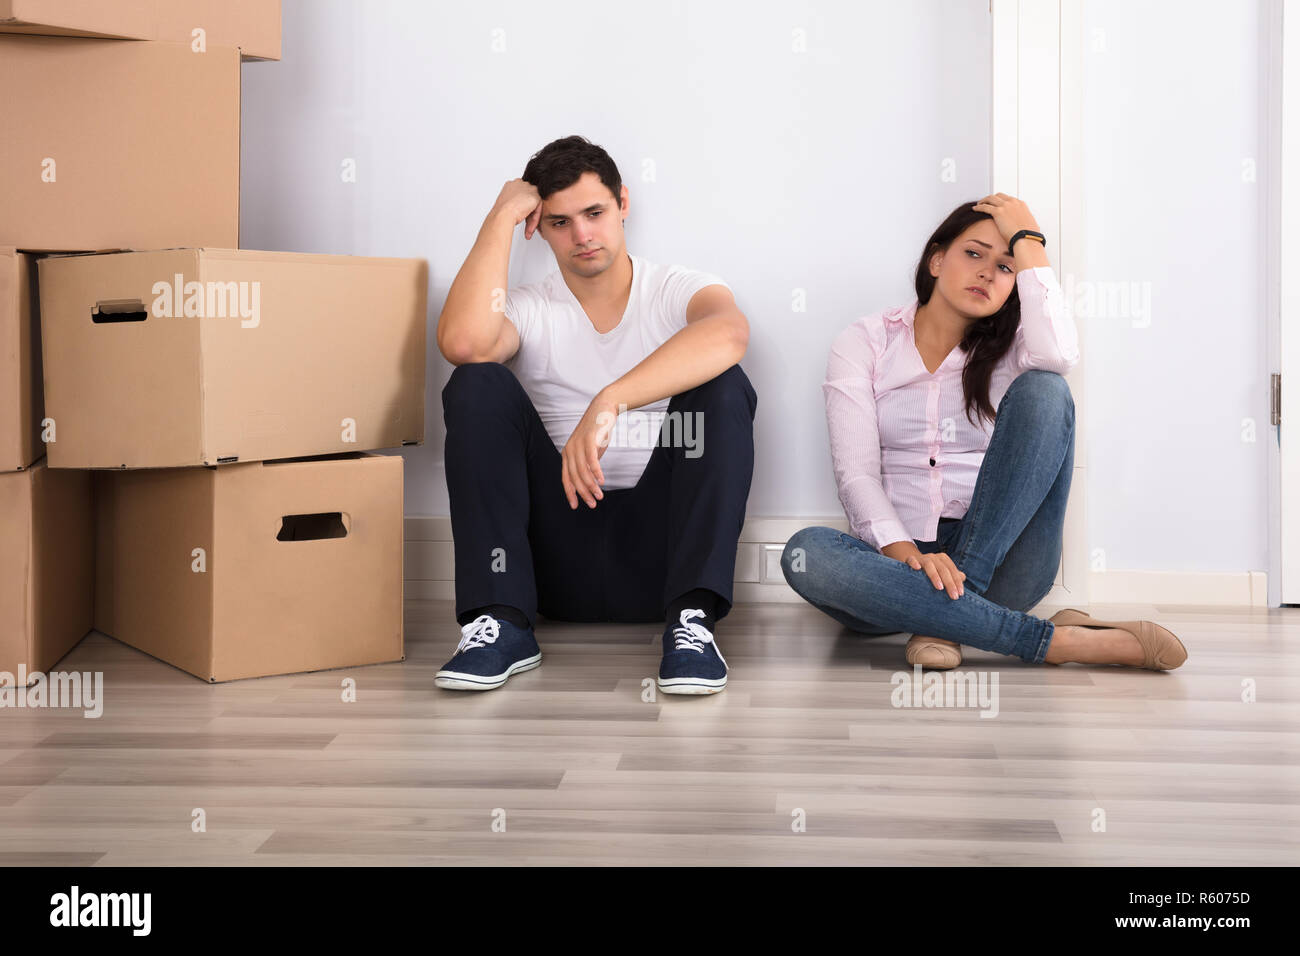 Sad Couple With Boxes Stock Photo